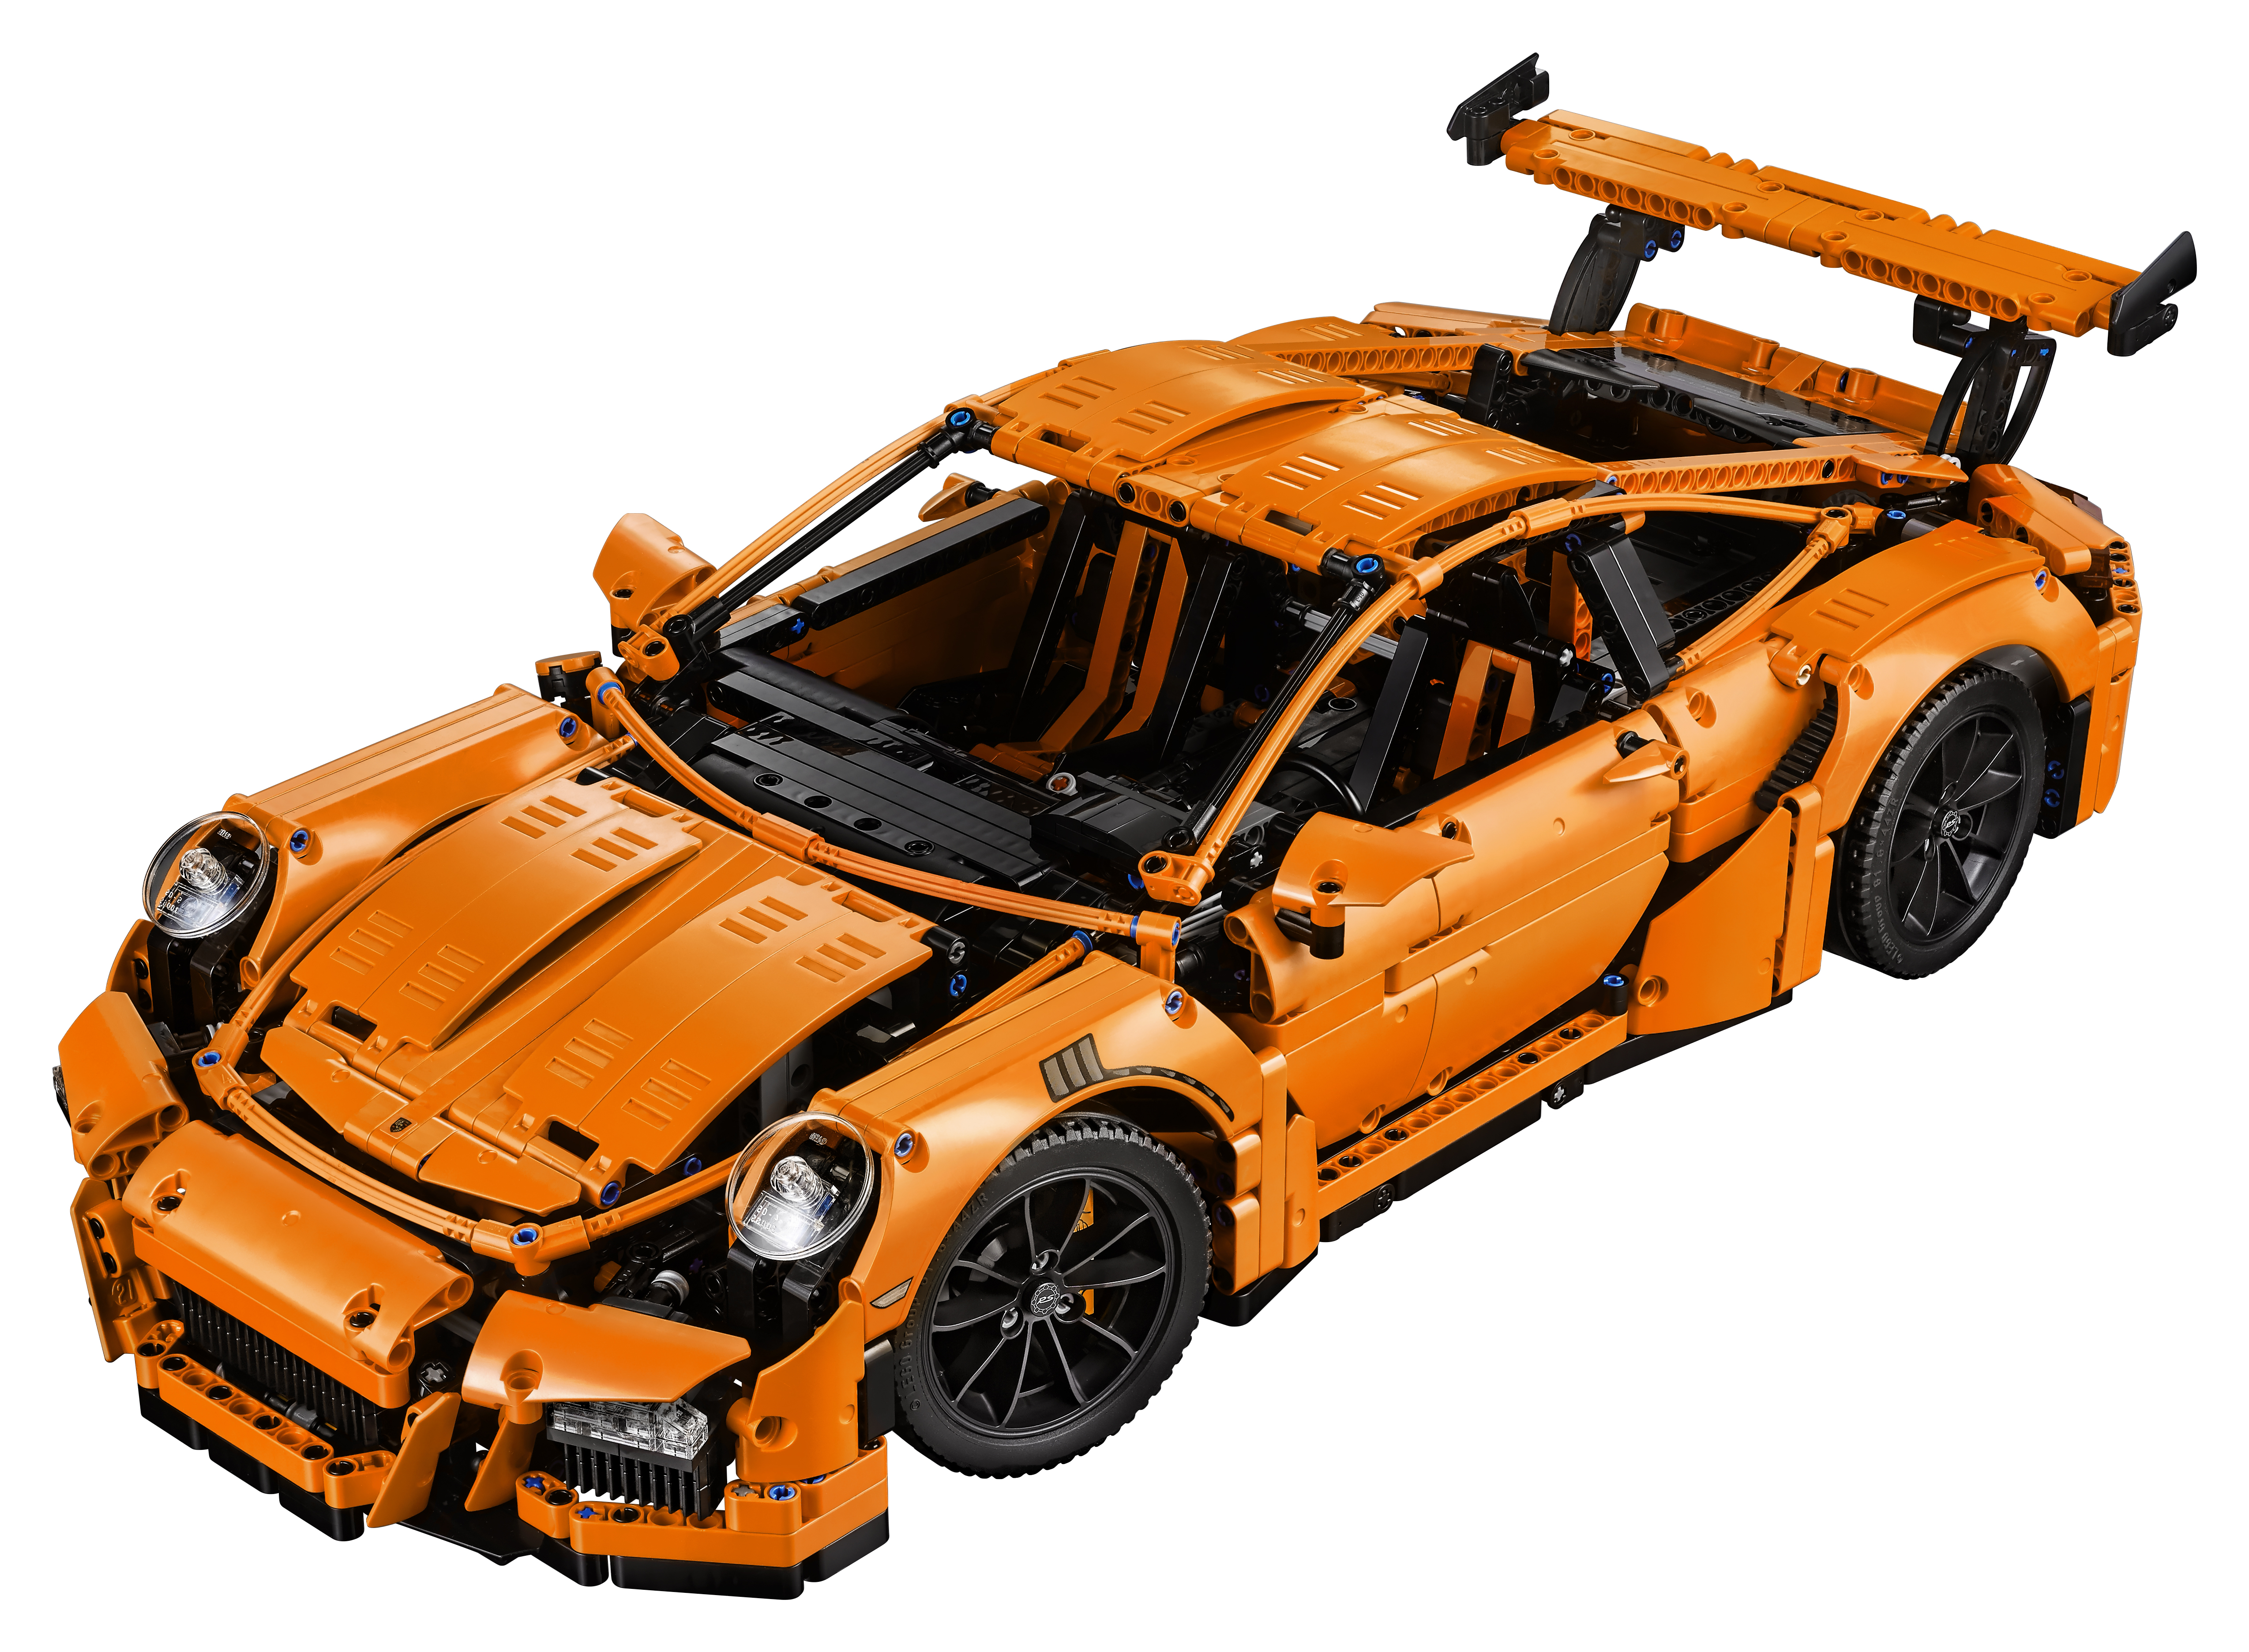 LEGO unveils the stunning 42056 Technic Porsche 911 GT3 RS - Jay's 